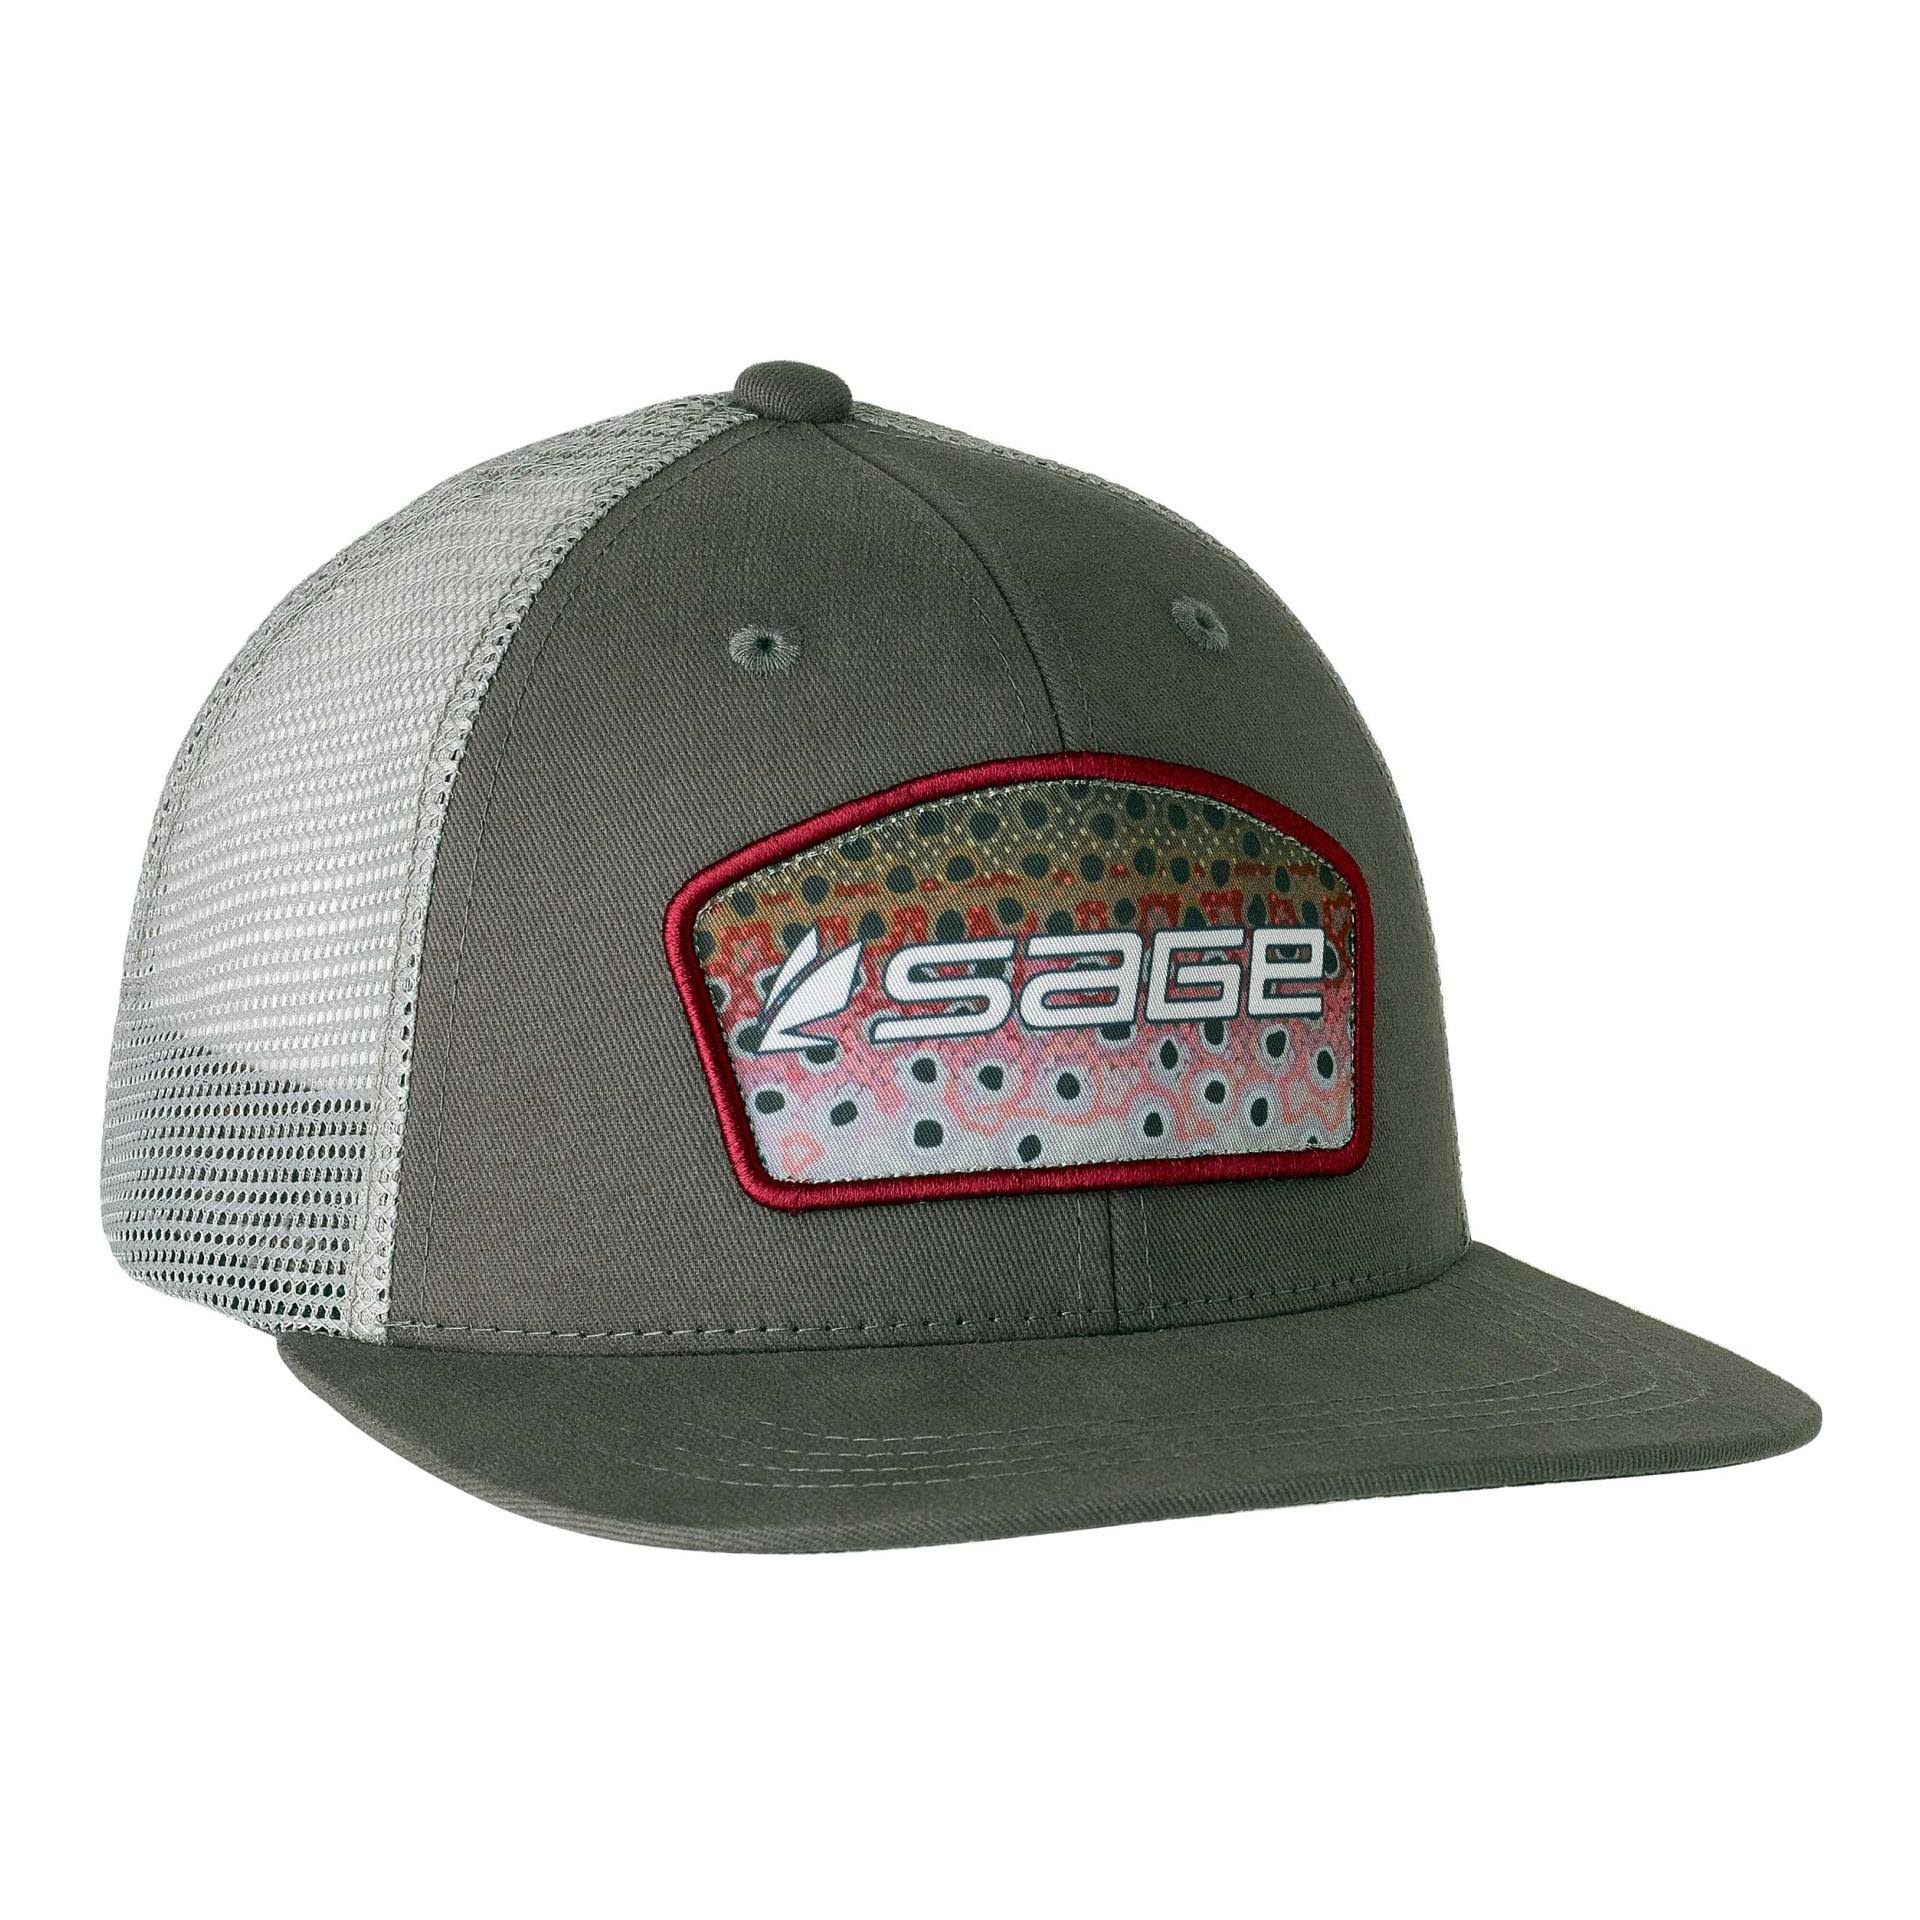 Sage Patch Trucker Hat - Brown Trout